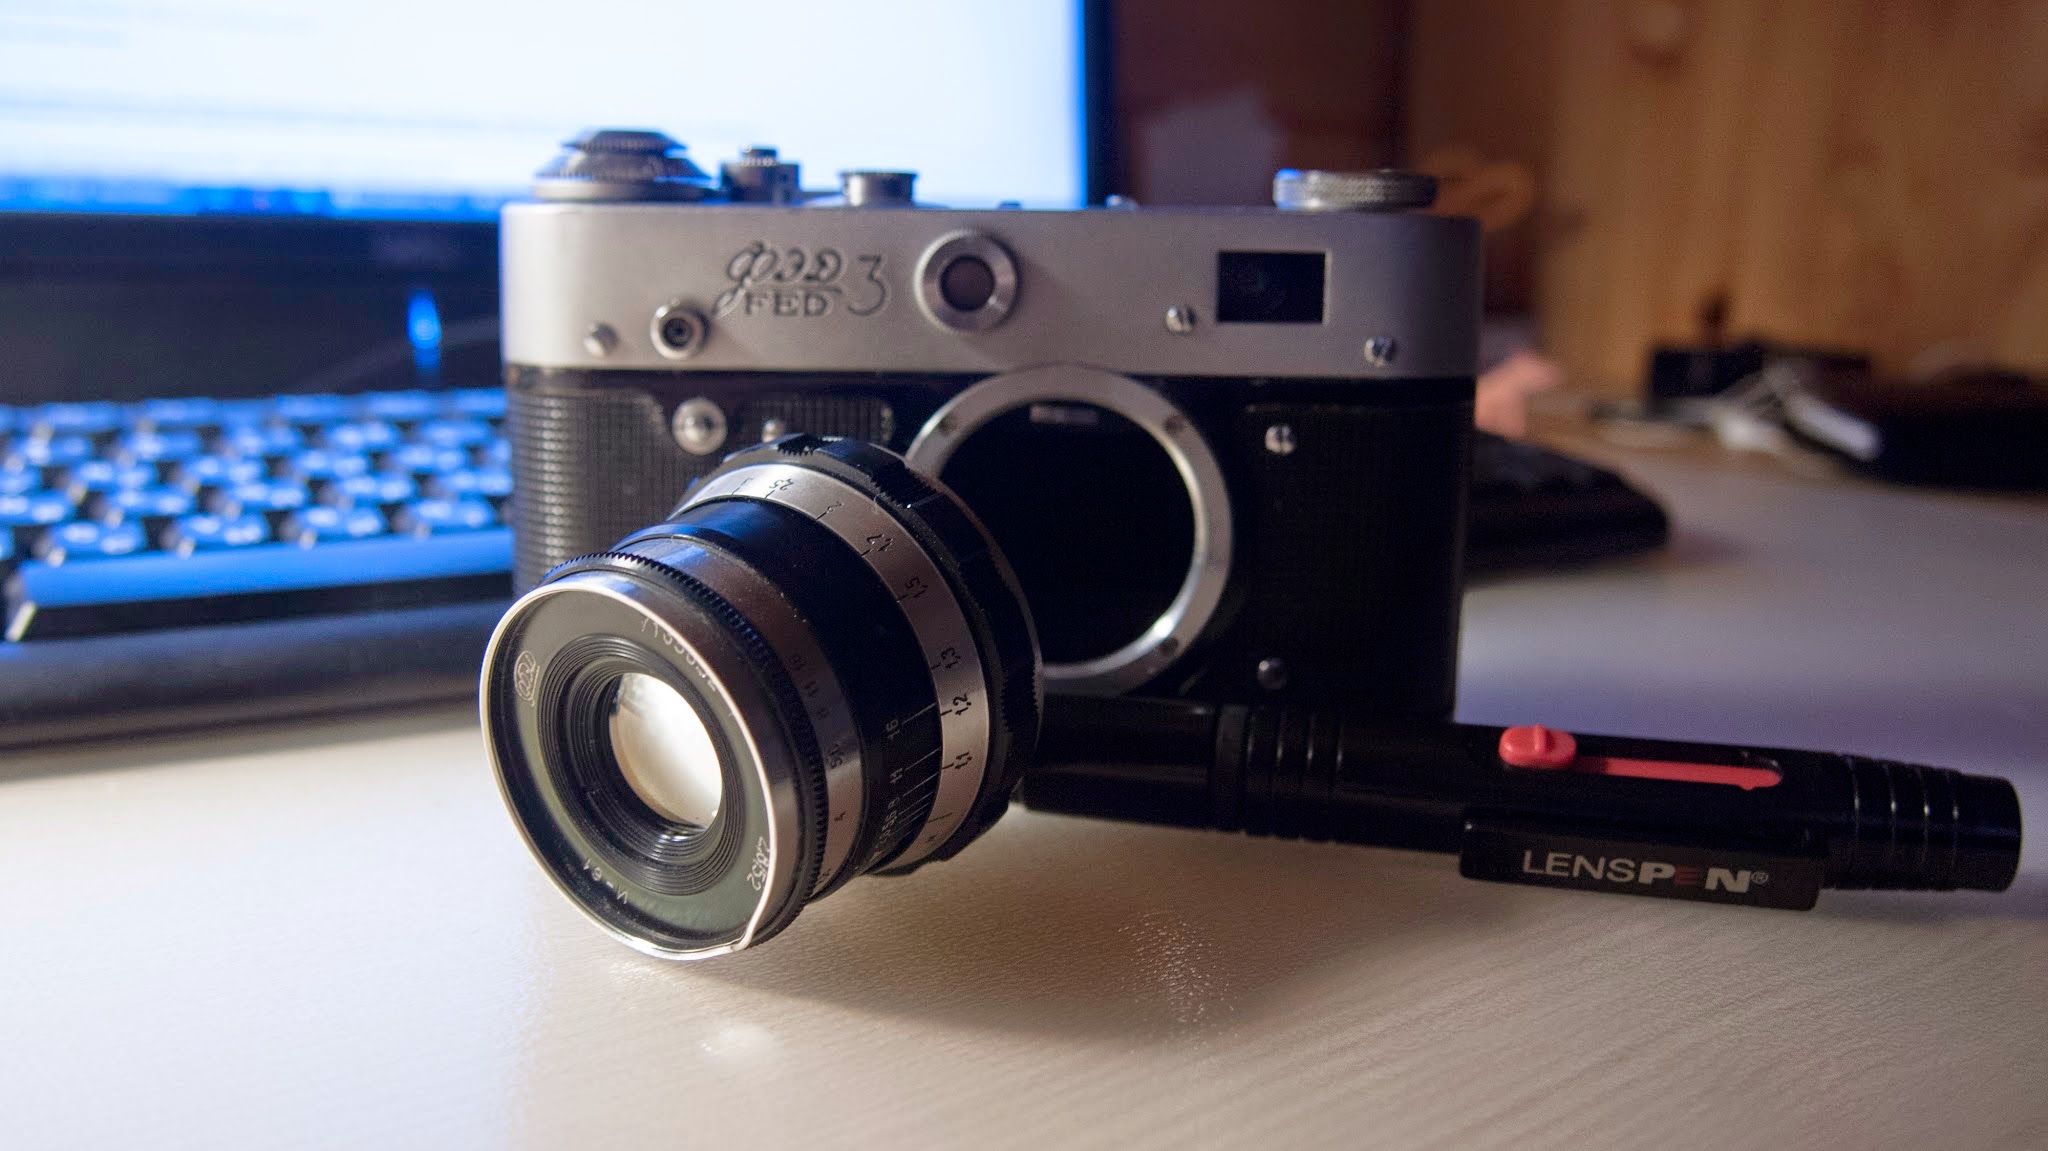 ФЭД 3 со снятым объективом И-61. Снято Panasonic Lumix GF1.